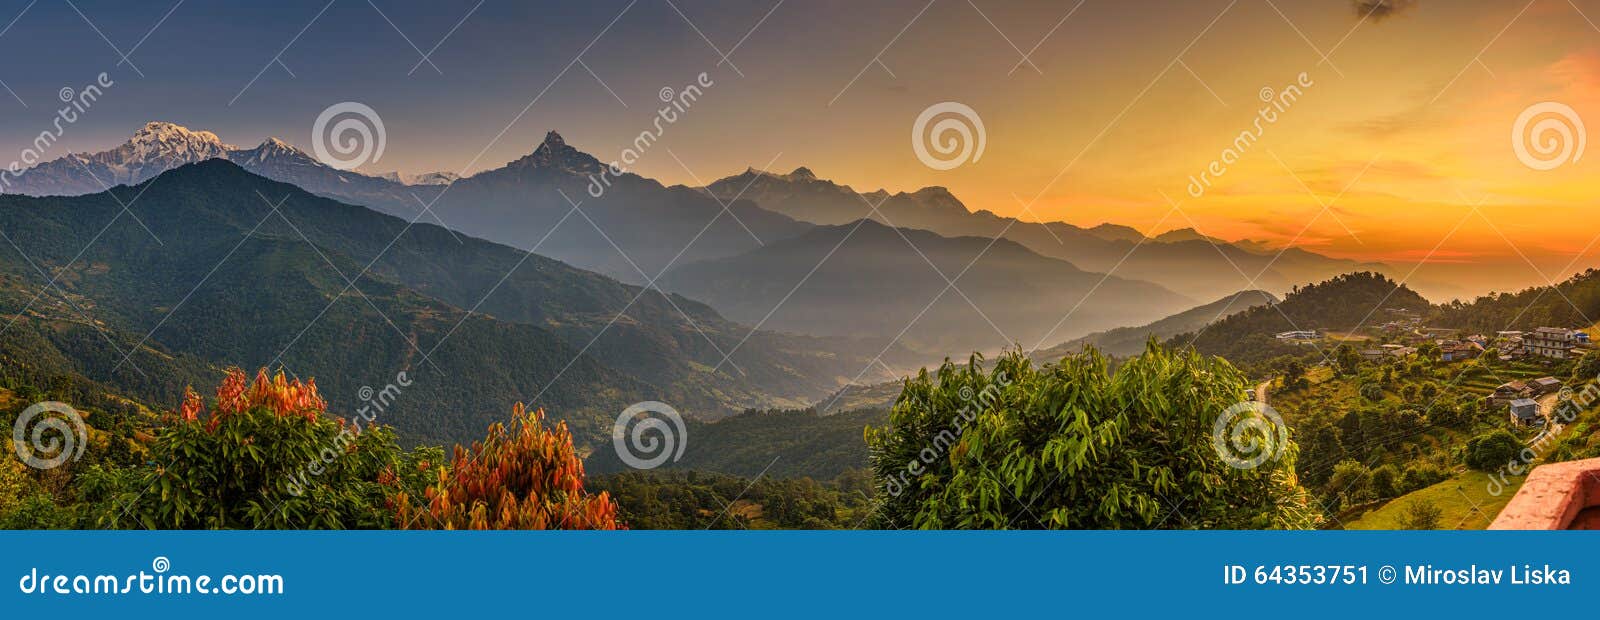 sunrise over himalaya mountains